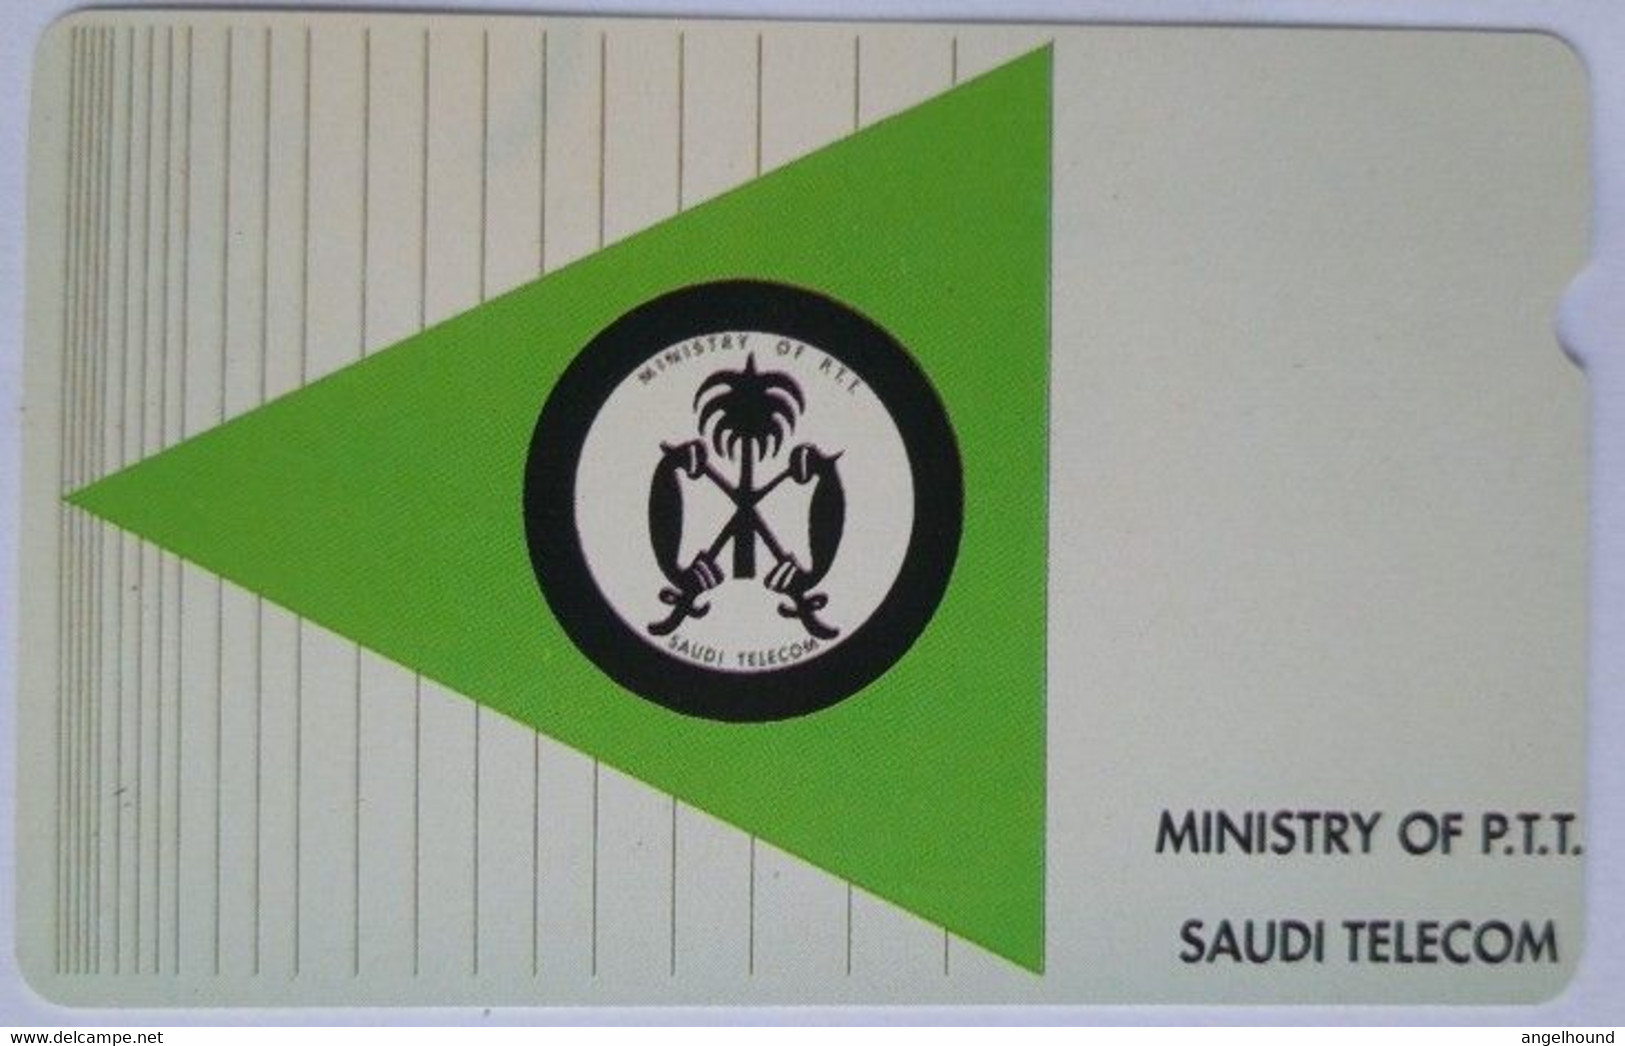 Saudi Telecom Ministry Of P.T.T. "A" A Value Logo In Green Triangle " - Saudi Arabia